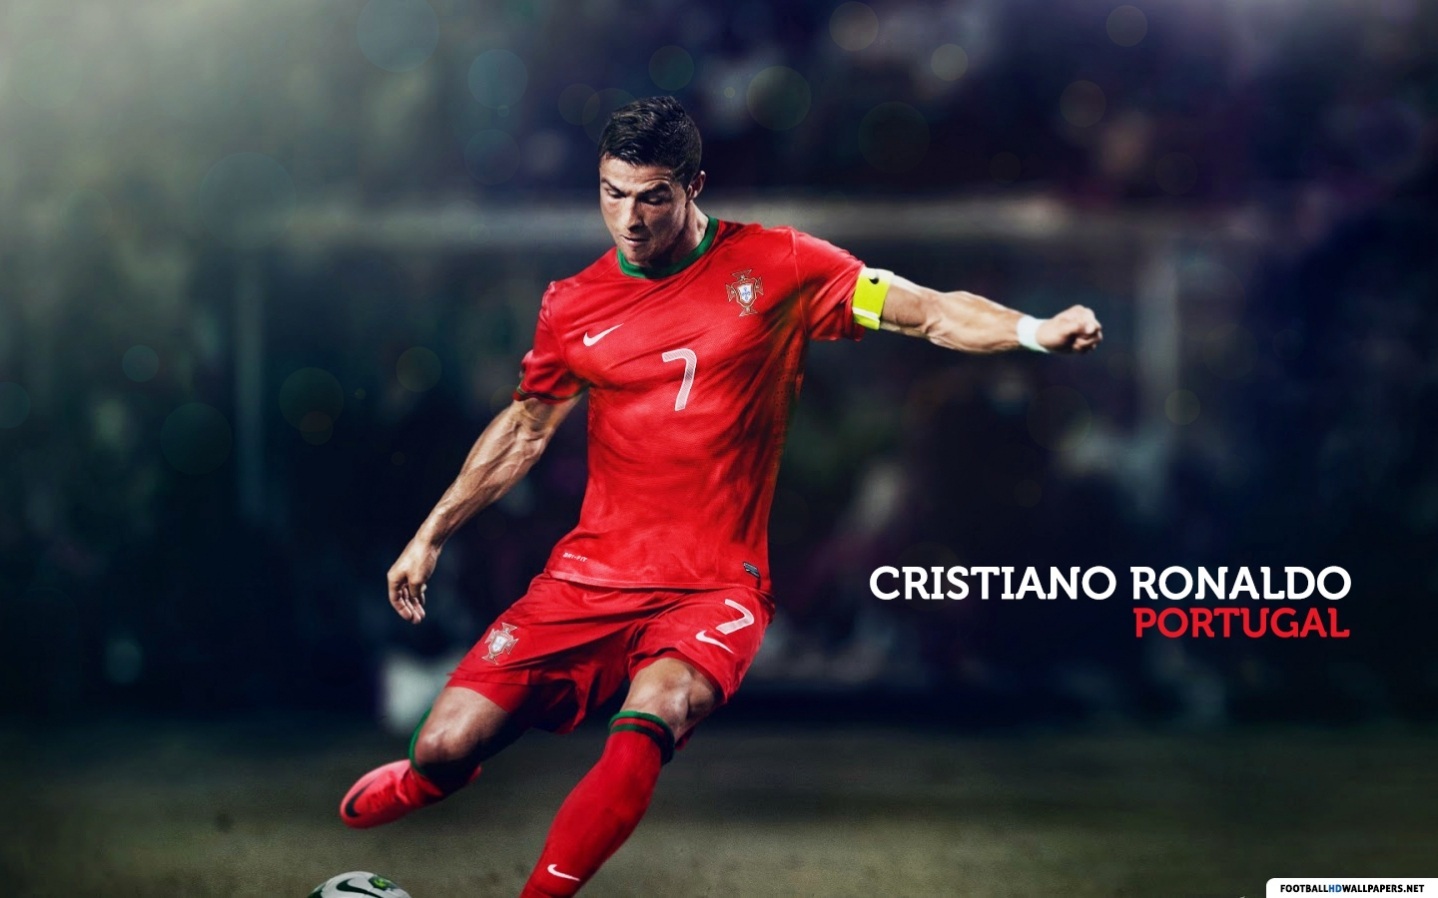 Cristiano Ronaldo Playing Football s s